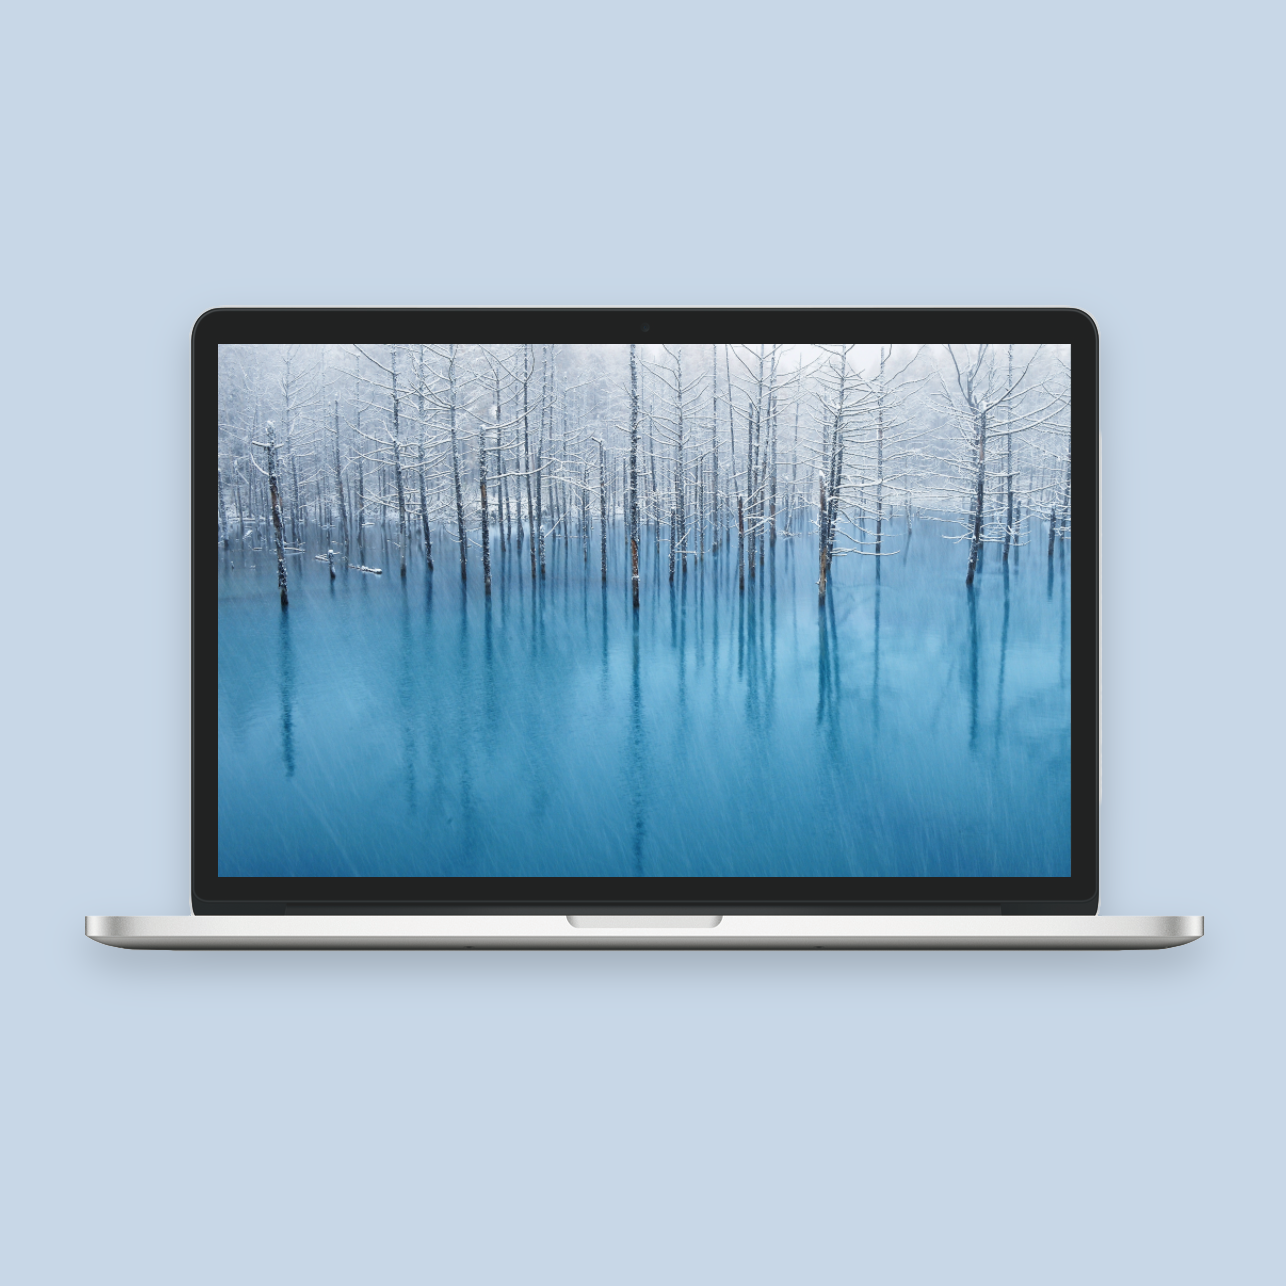 The Retina MacBook Pro is Obsolete — Basic Apple Guy